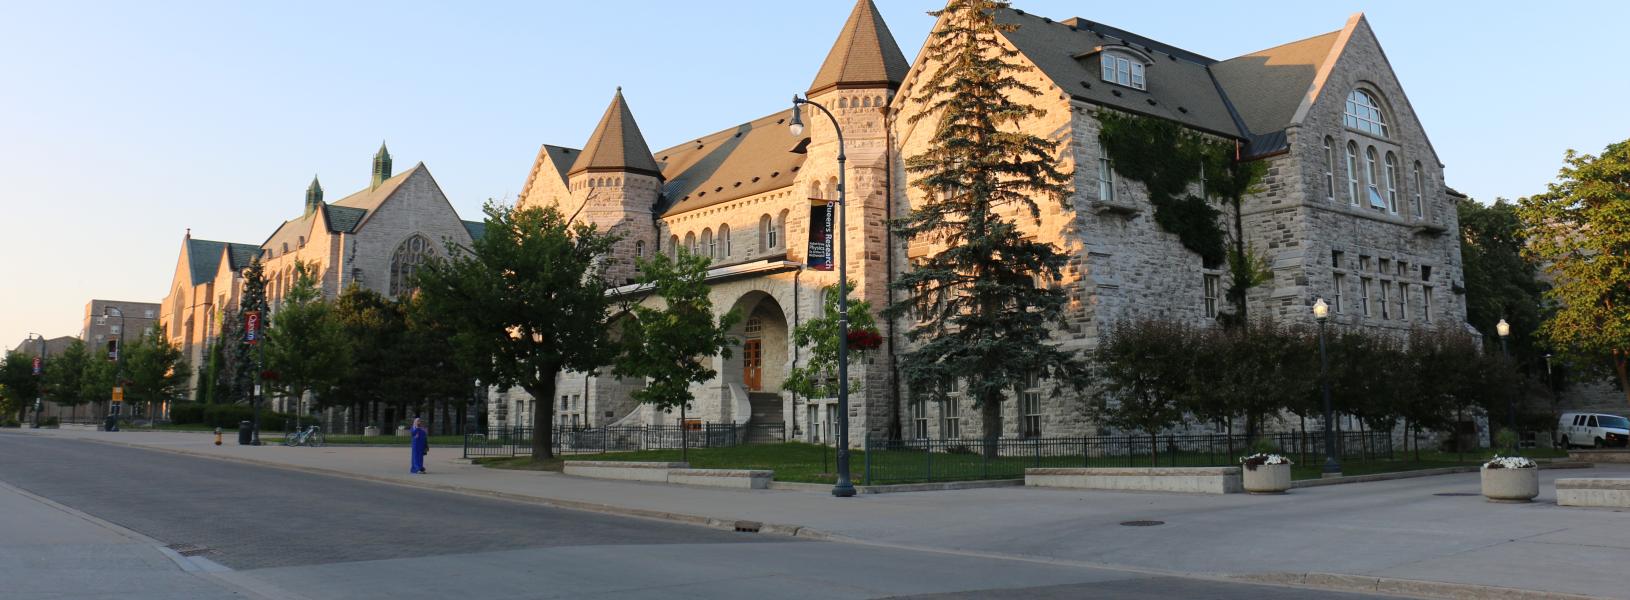 Ontario Hall